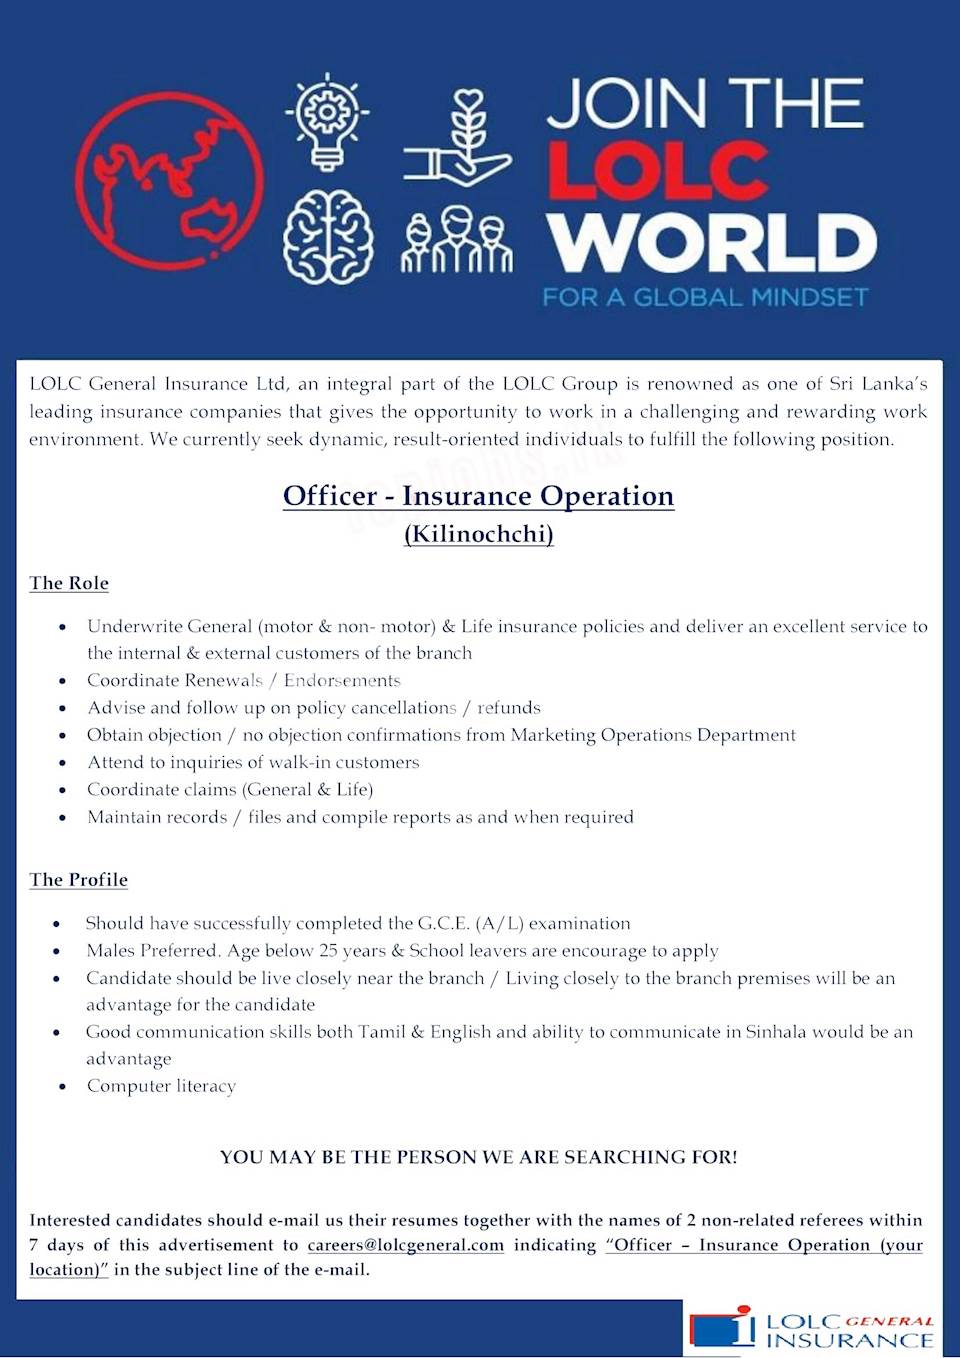 Officer - Insurance Operation (Kilinochchi)